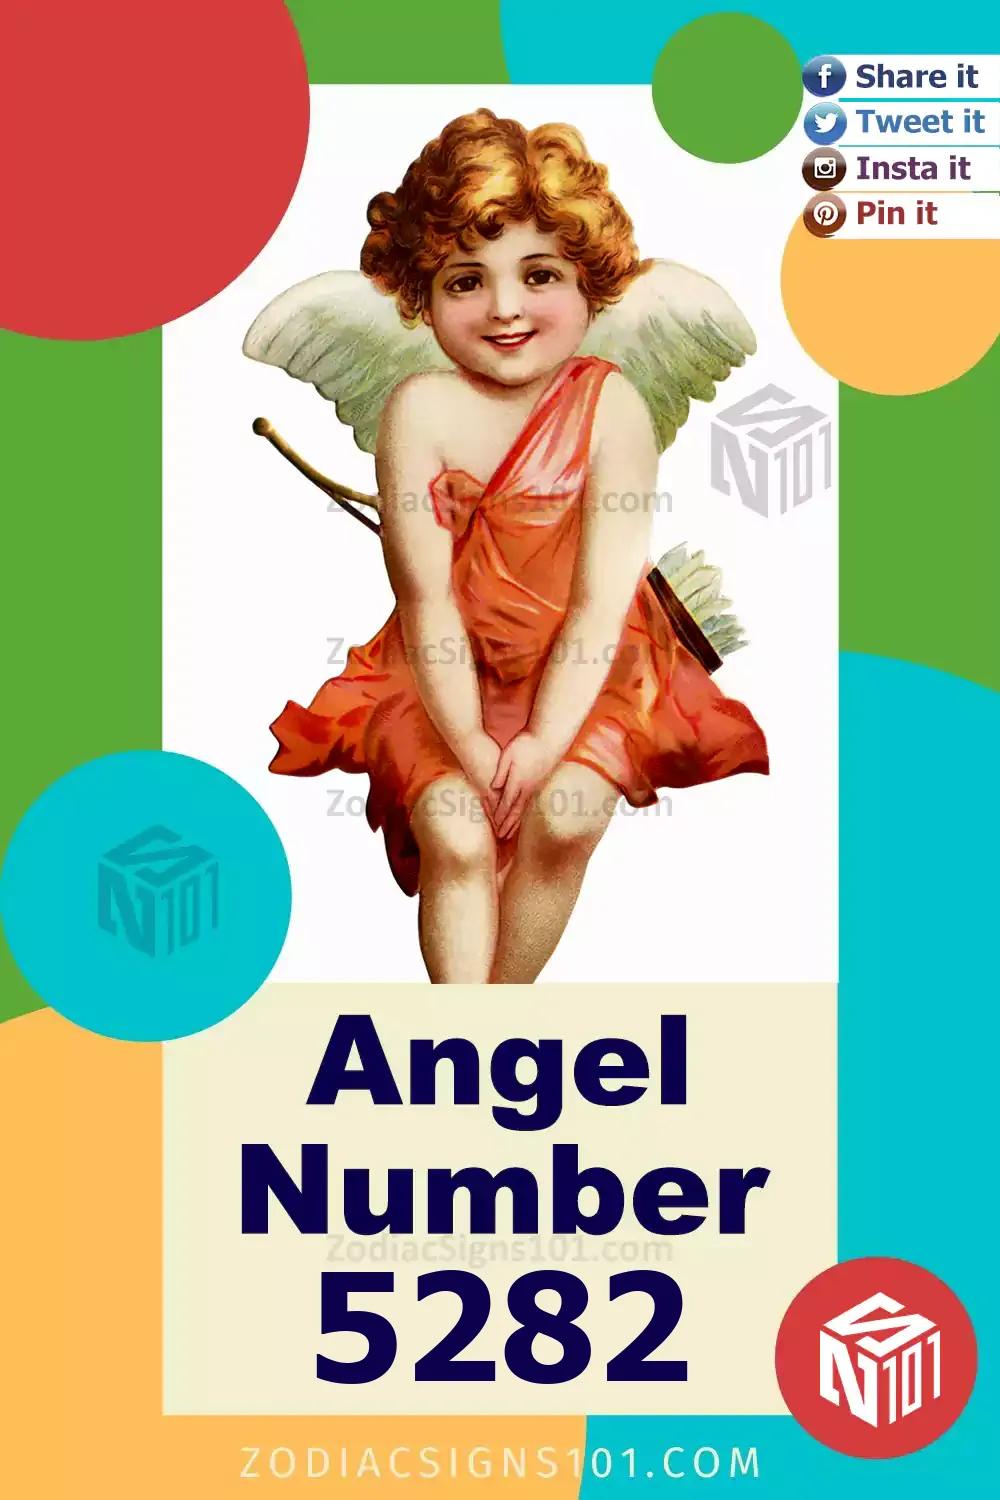 5282-Angel-Number-Meaning.jpg